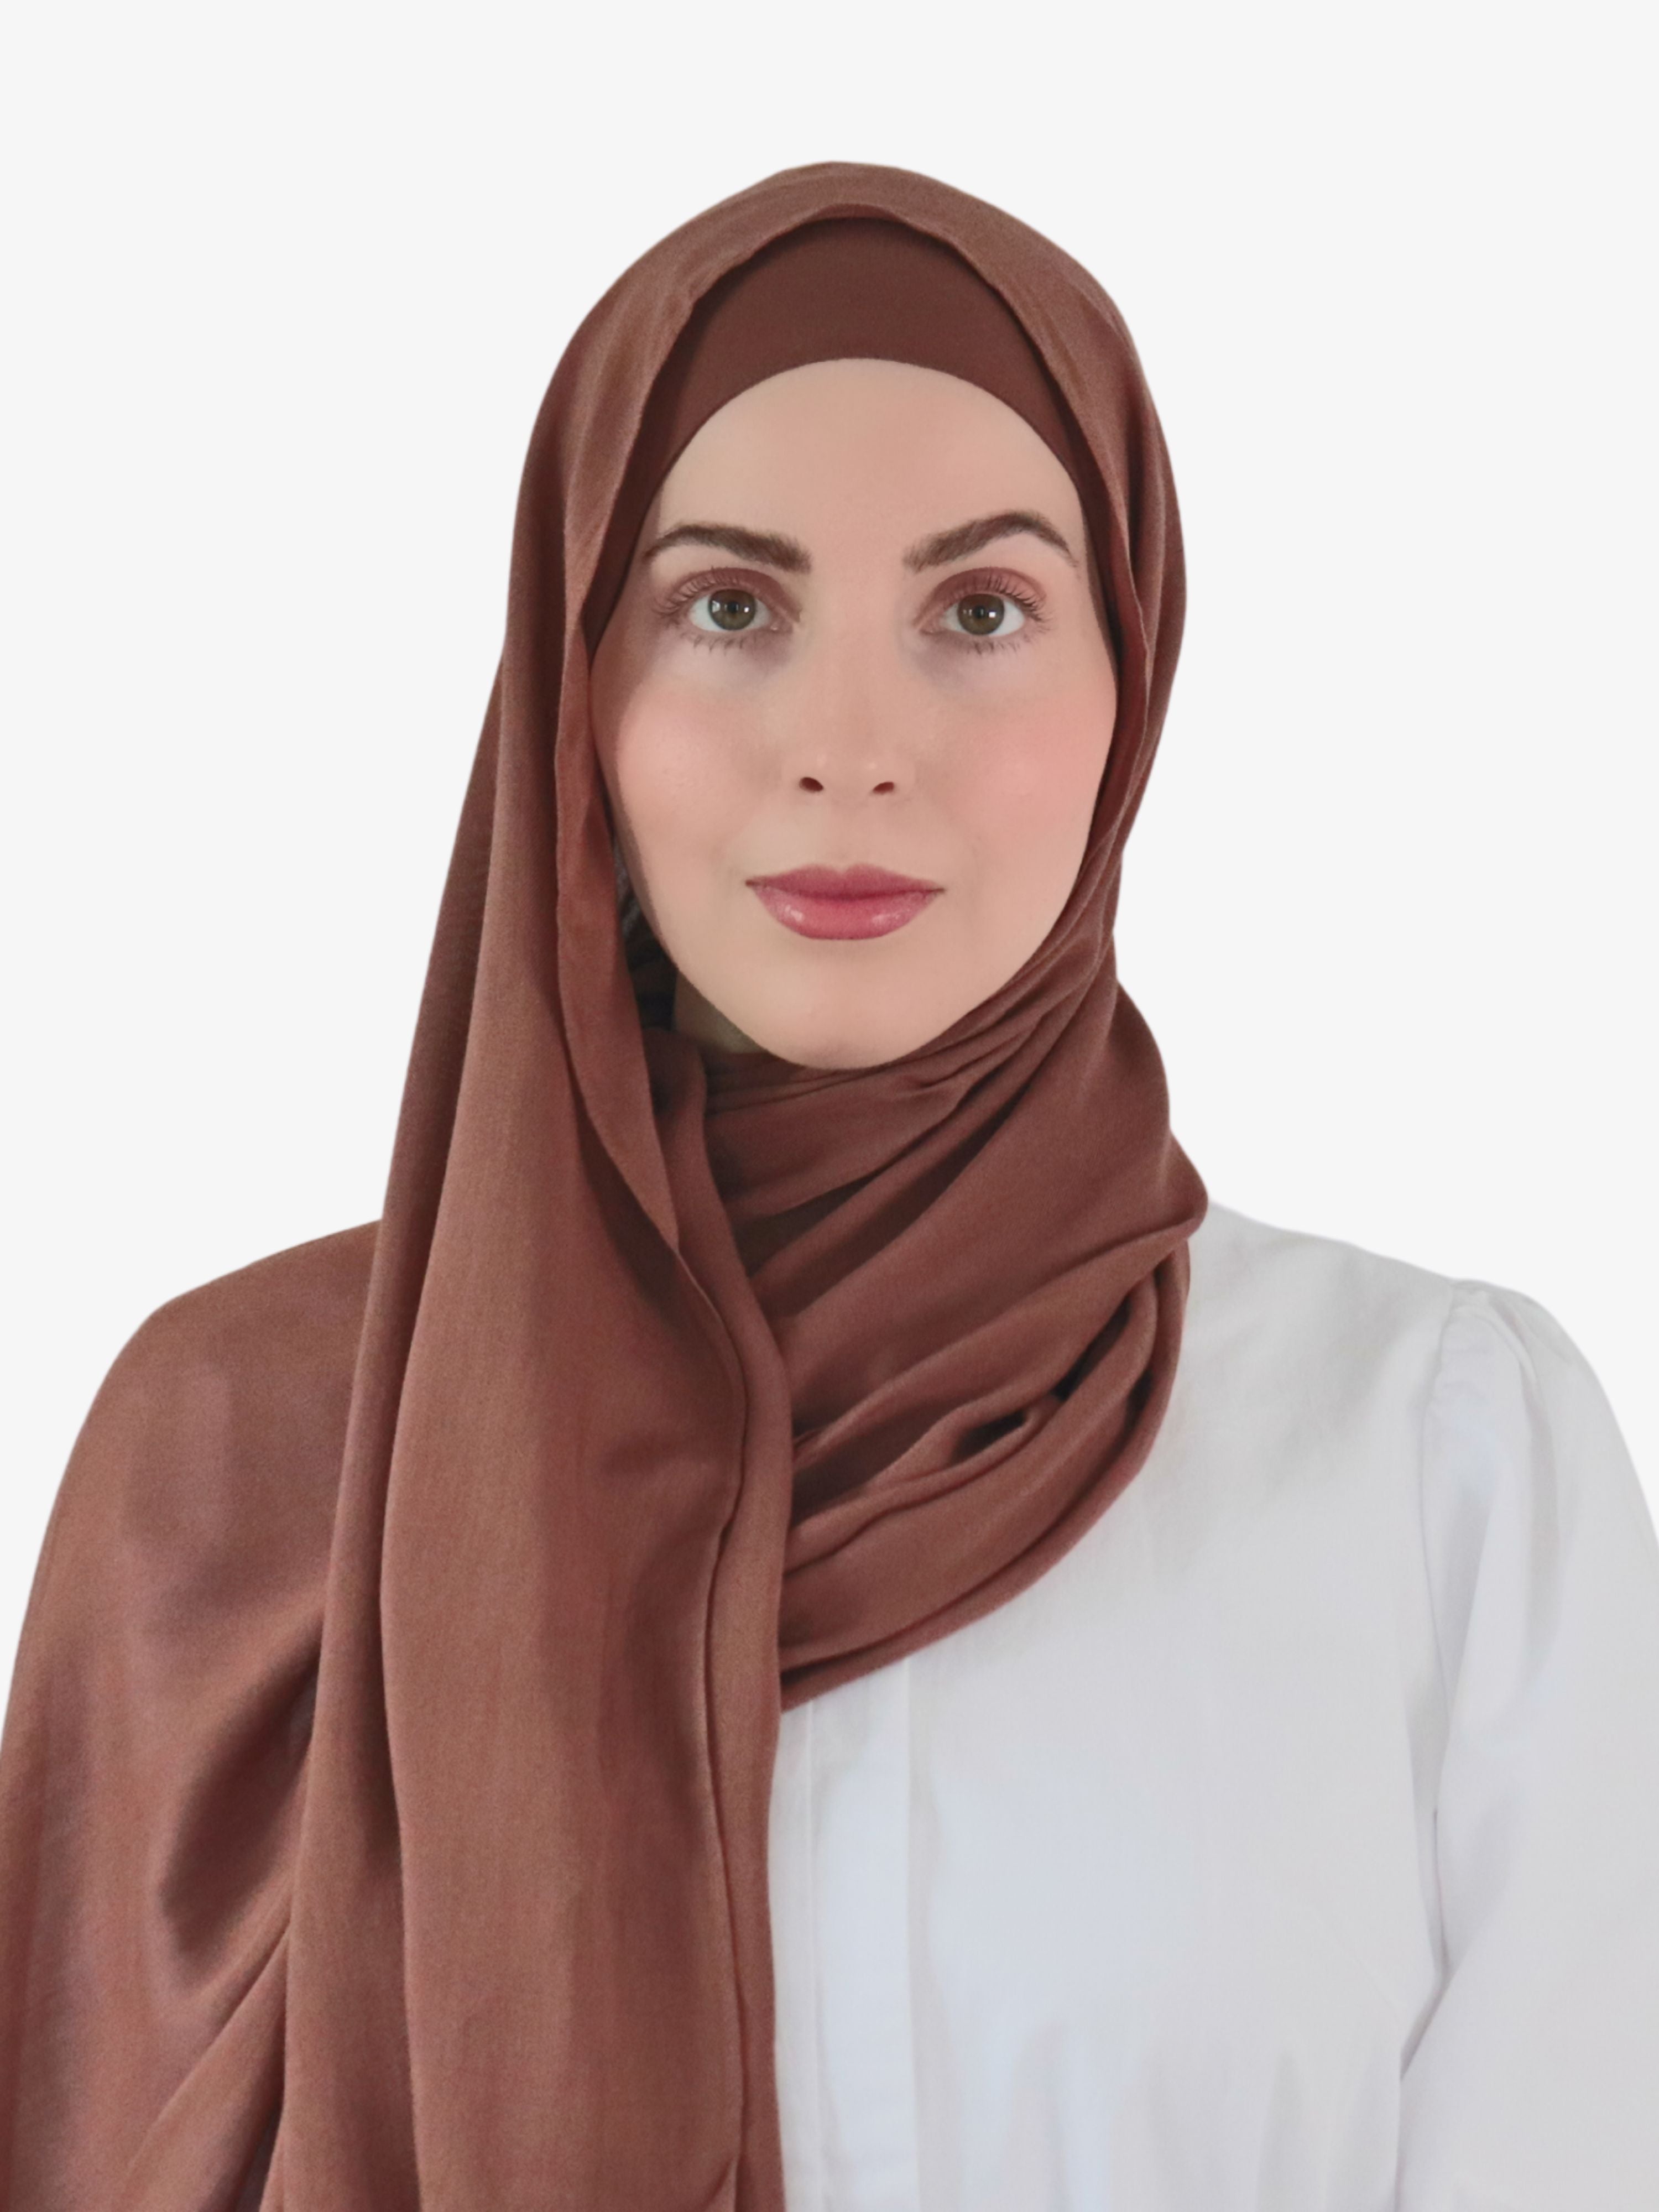 Black jersey ultimate comfort hijab - only at VELA